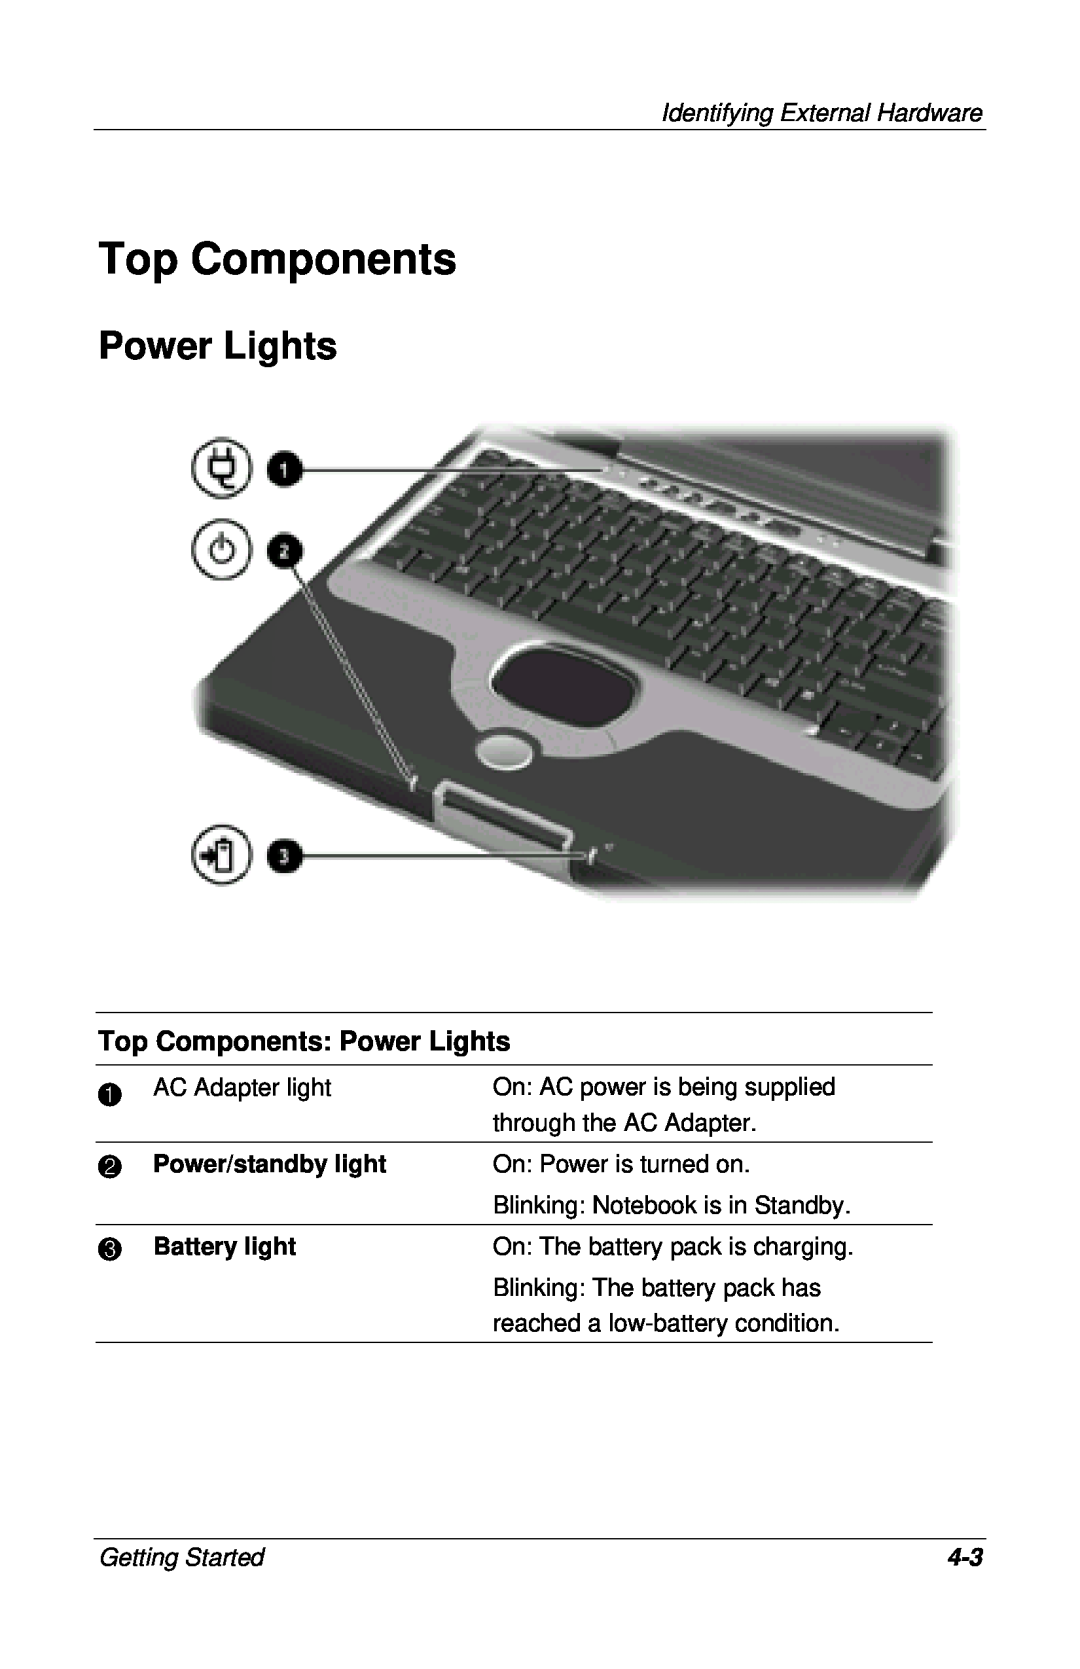 HP 920US, 955AP, 950AP, 943AP, 945AP, 940AP, 935AP manual Top Components Power Lights, Power/standby light, Battery light 